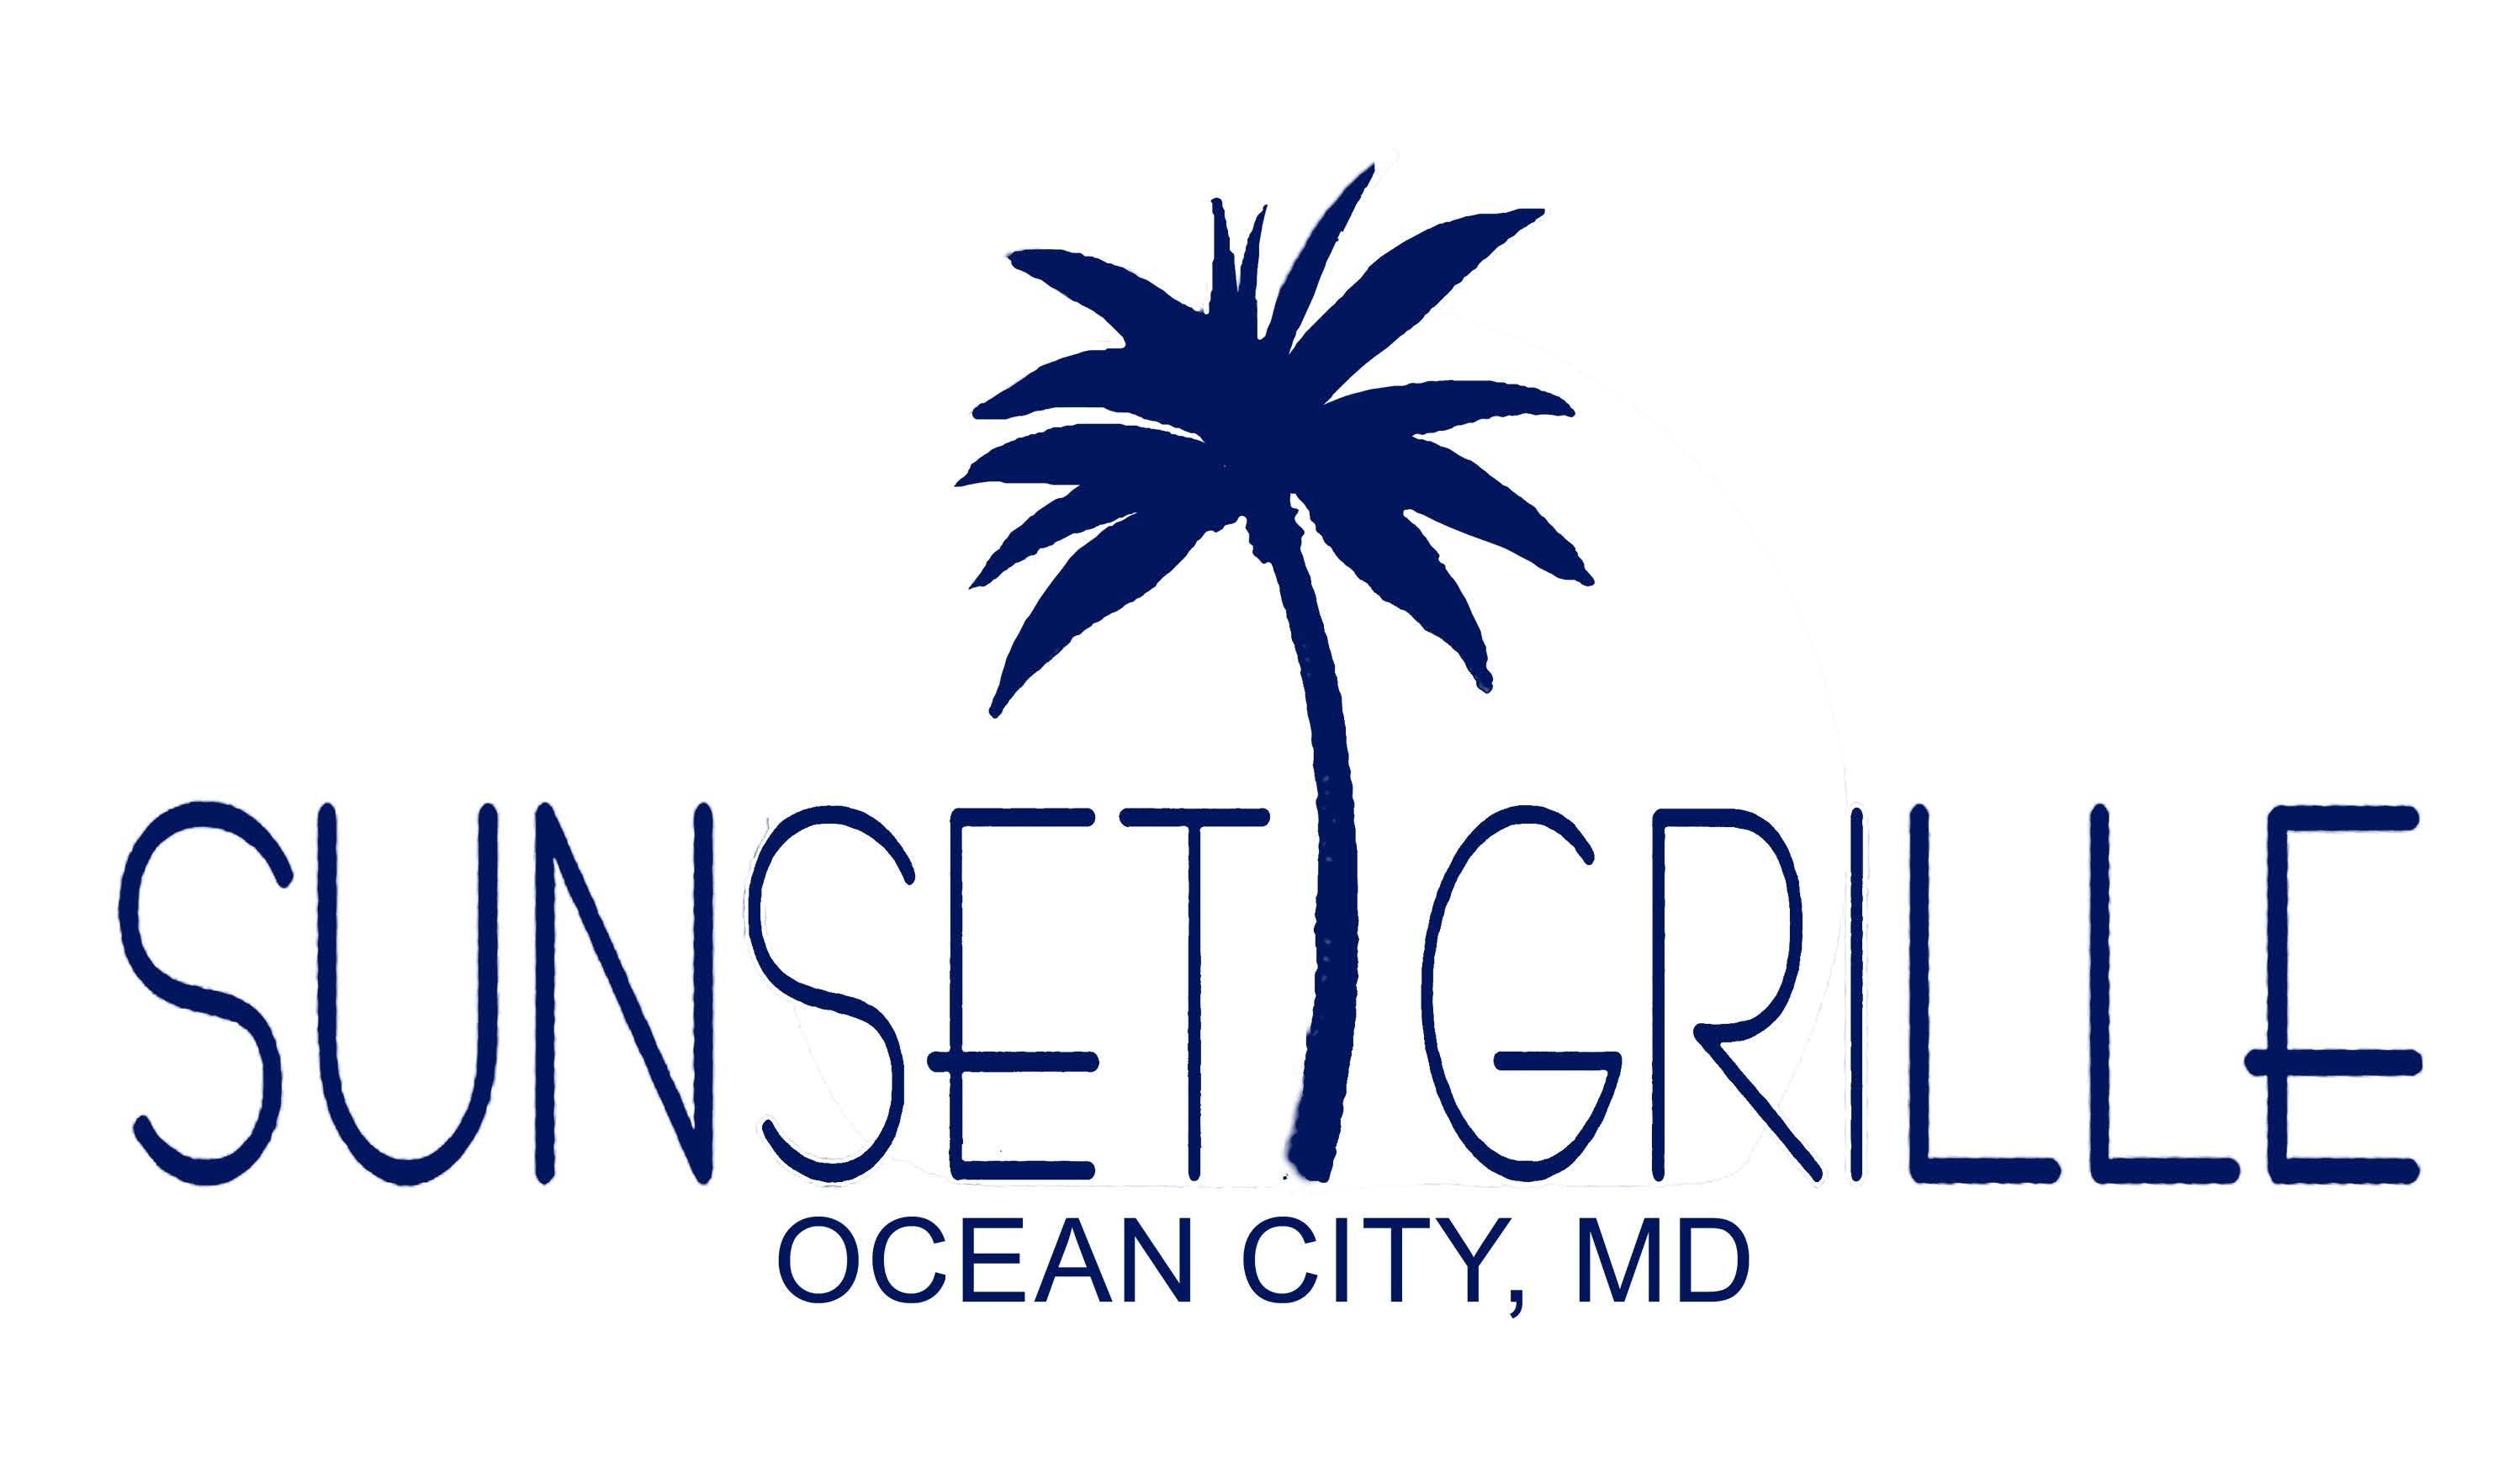 Gallery | Dockside Bar & Restaurant West Ocean City MD